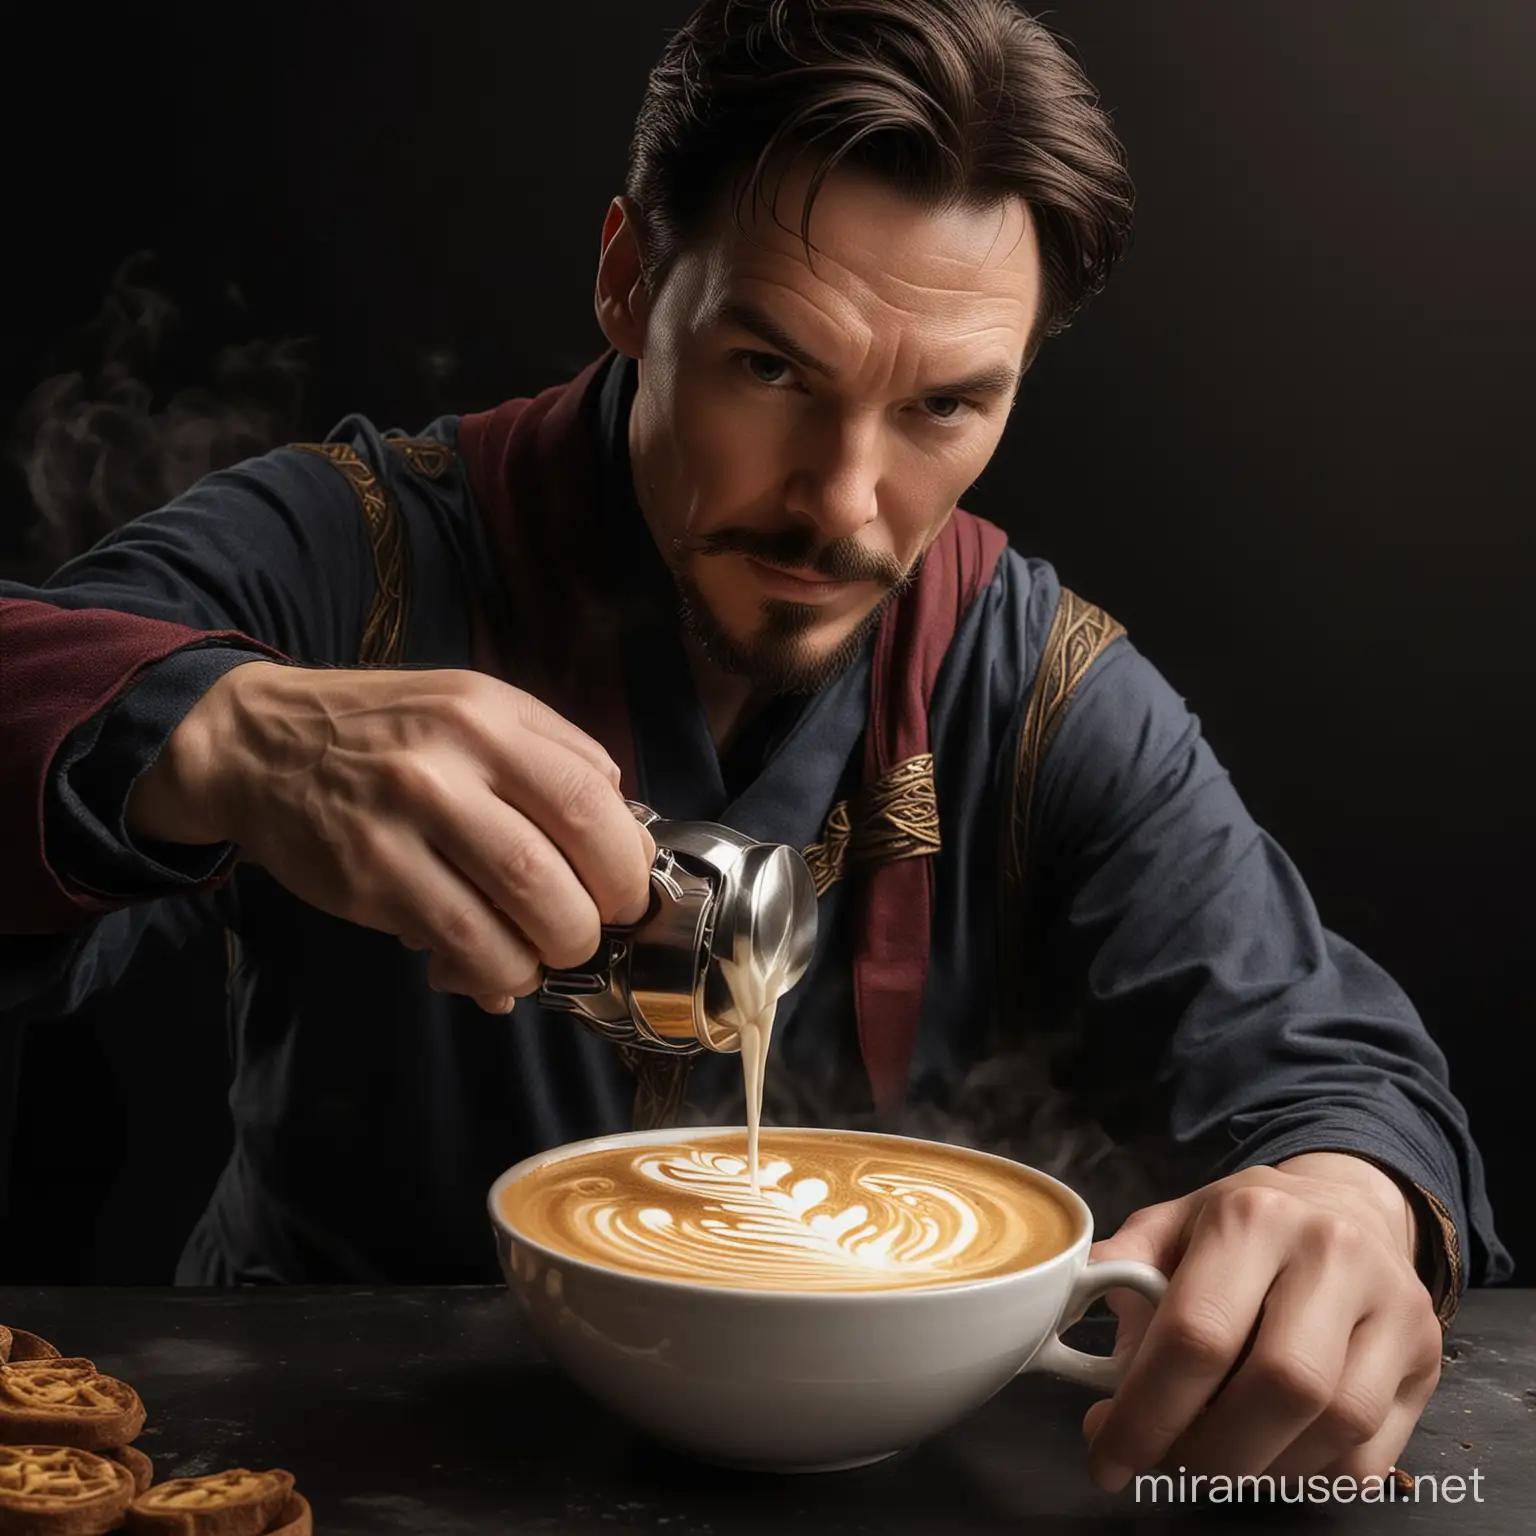 Dr Strange Creating Latte Art in Enigmatic Darkness